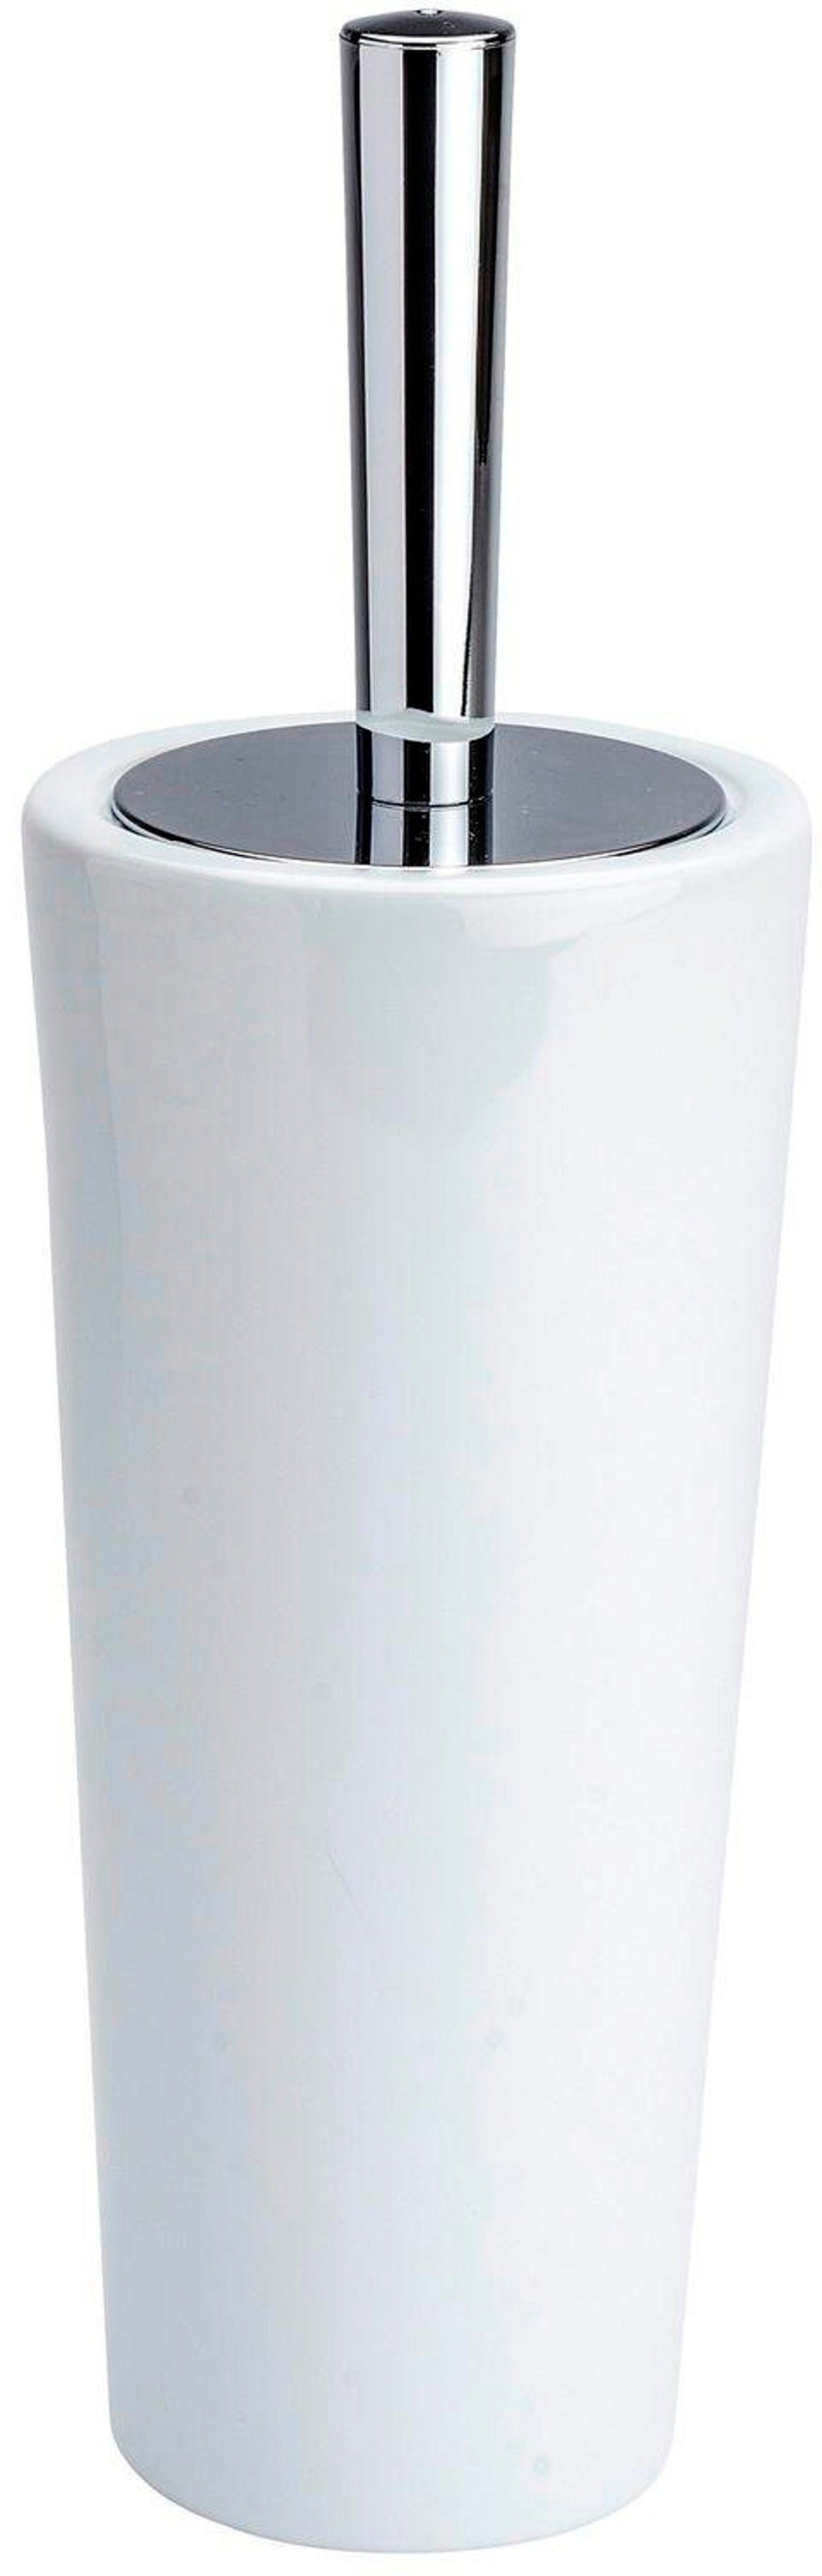 Deckel, Coni, WENKO Keramik, Keramik, Acrylnitril-Butadien-Styrol (ABS) WC-Garnitur Material: Stiel: